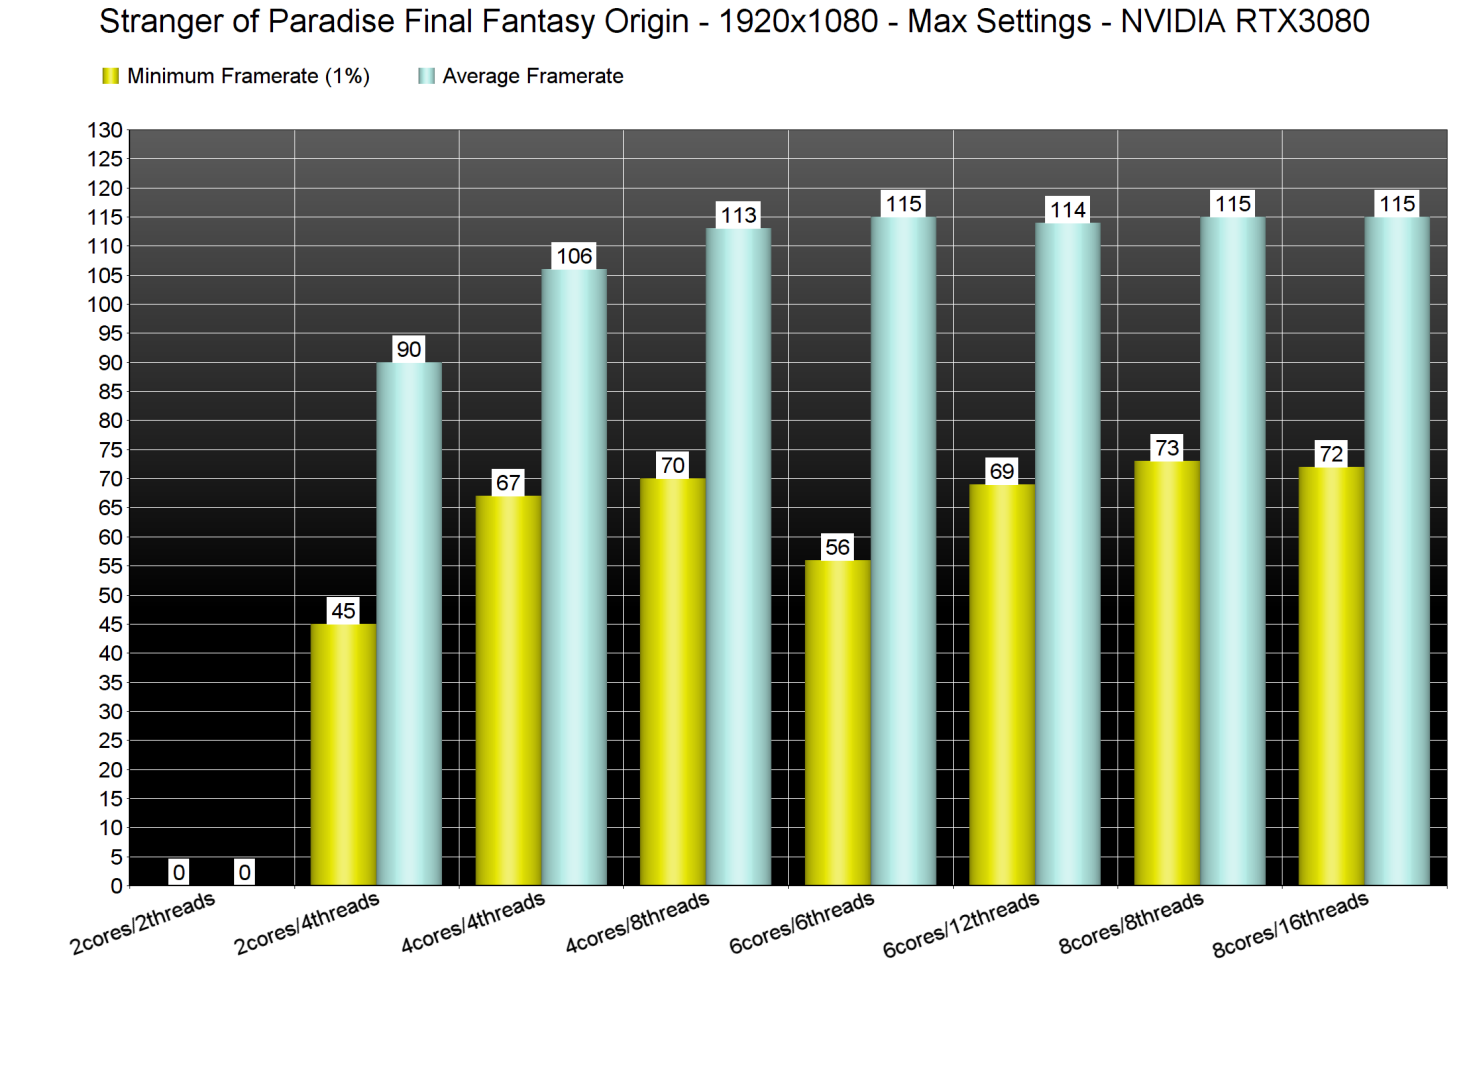 Stranger of Paradise Final Fantasy Origin CPU benchmarks